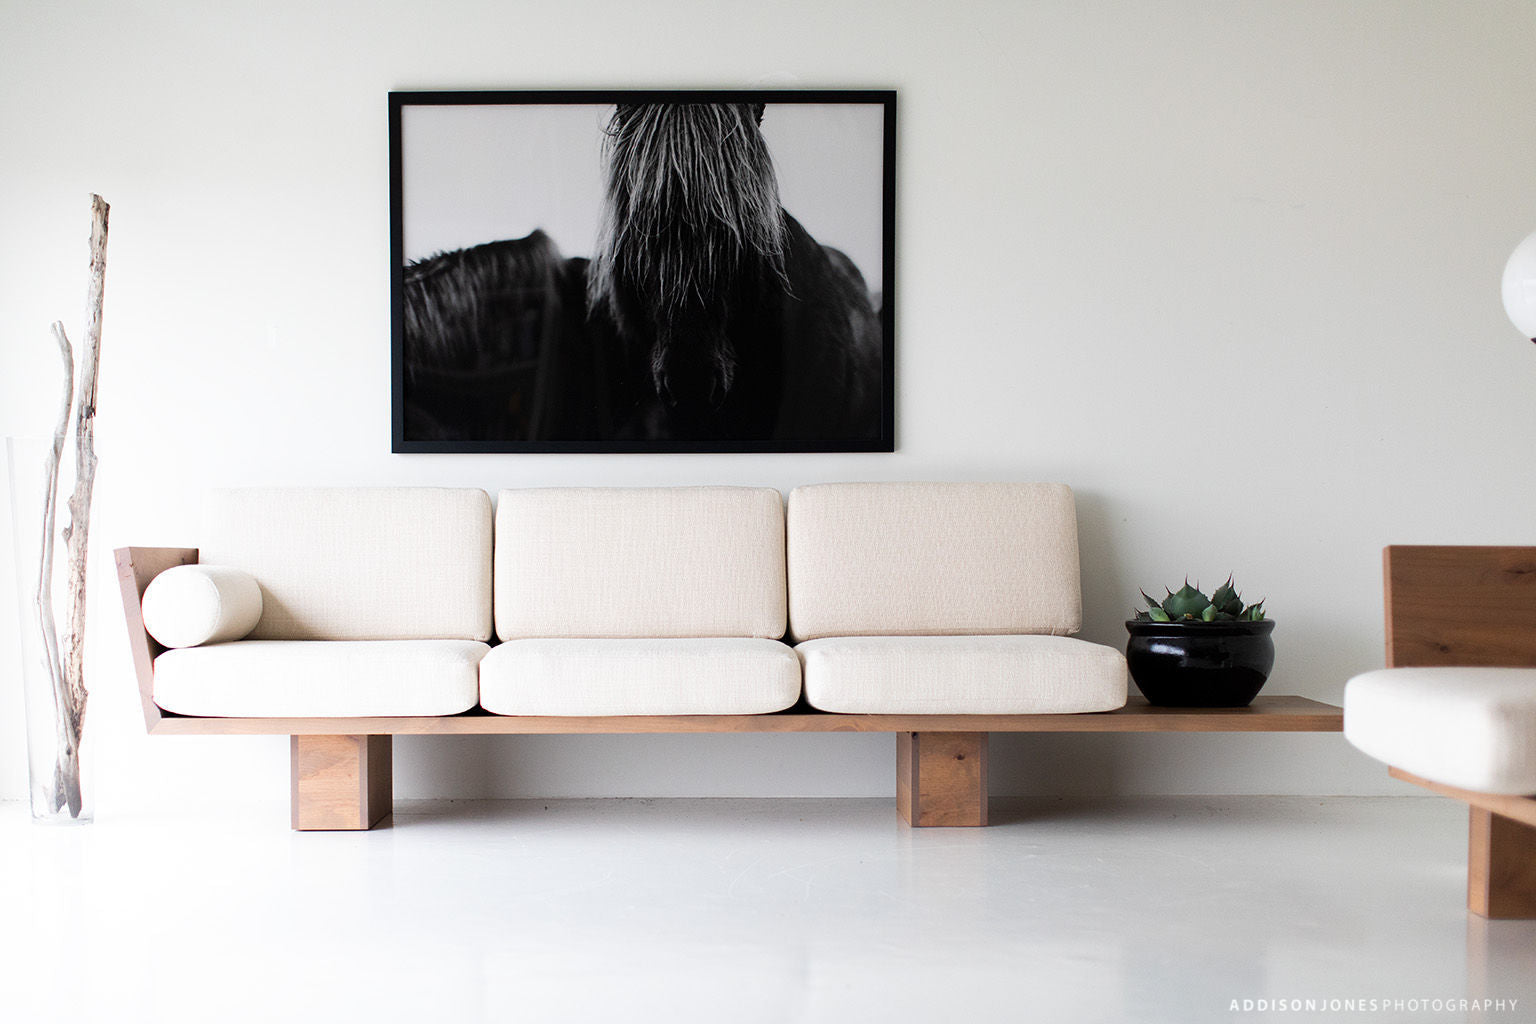 Suelo Modern Wood Sofa - 0520, 01